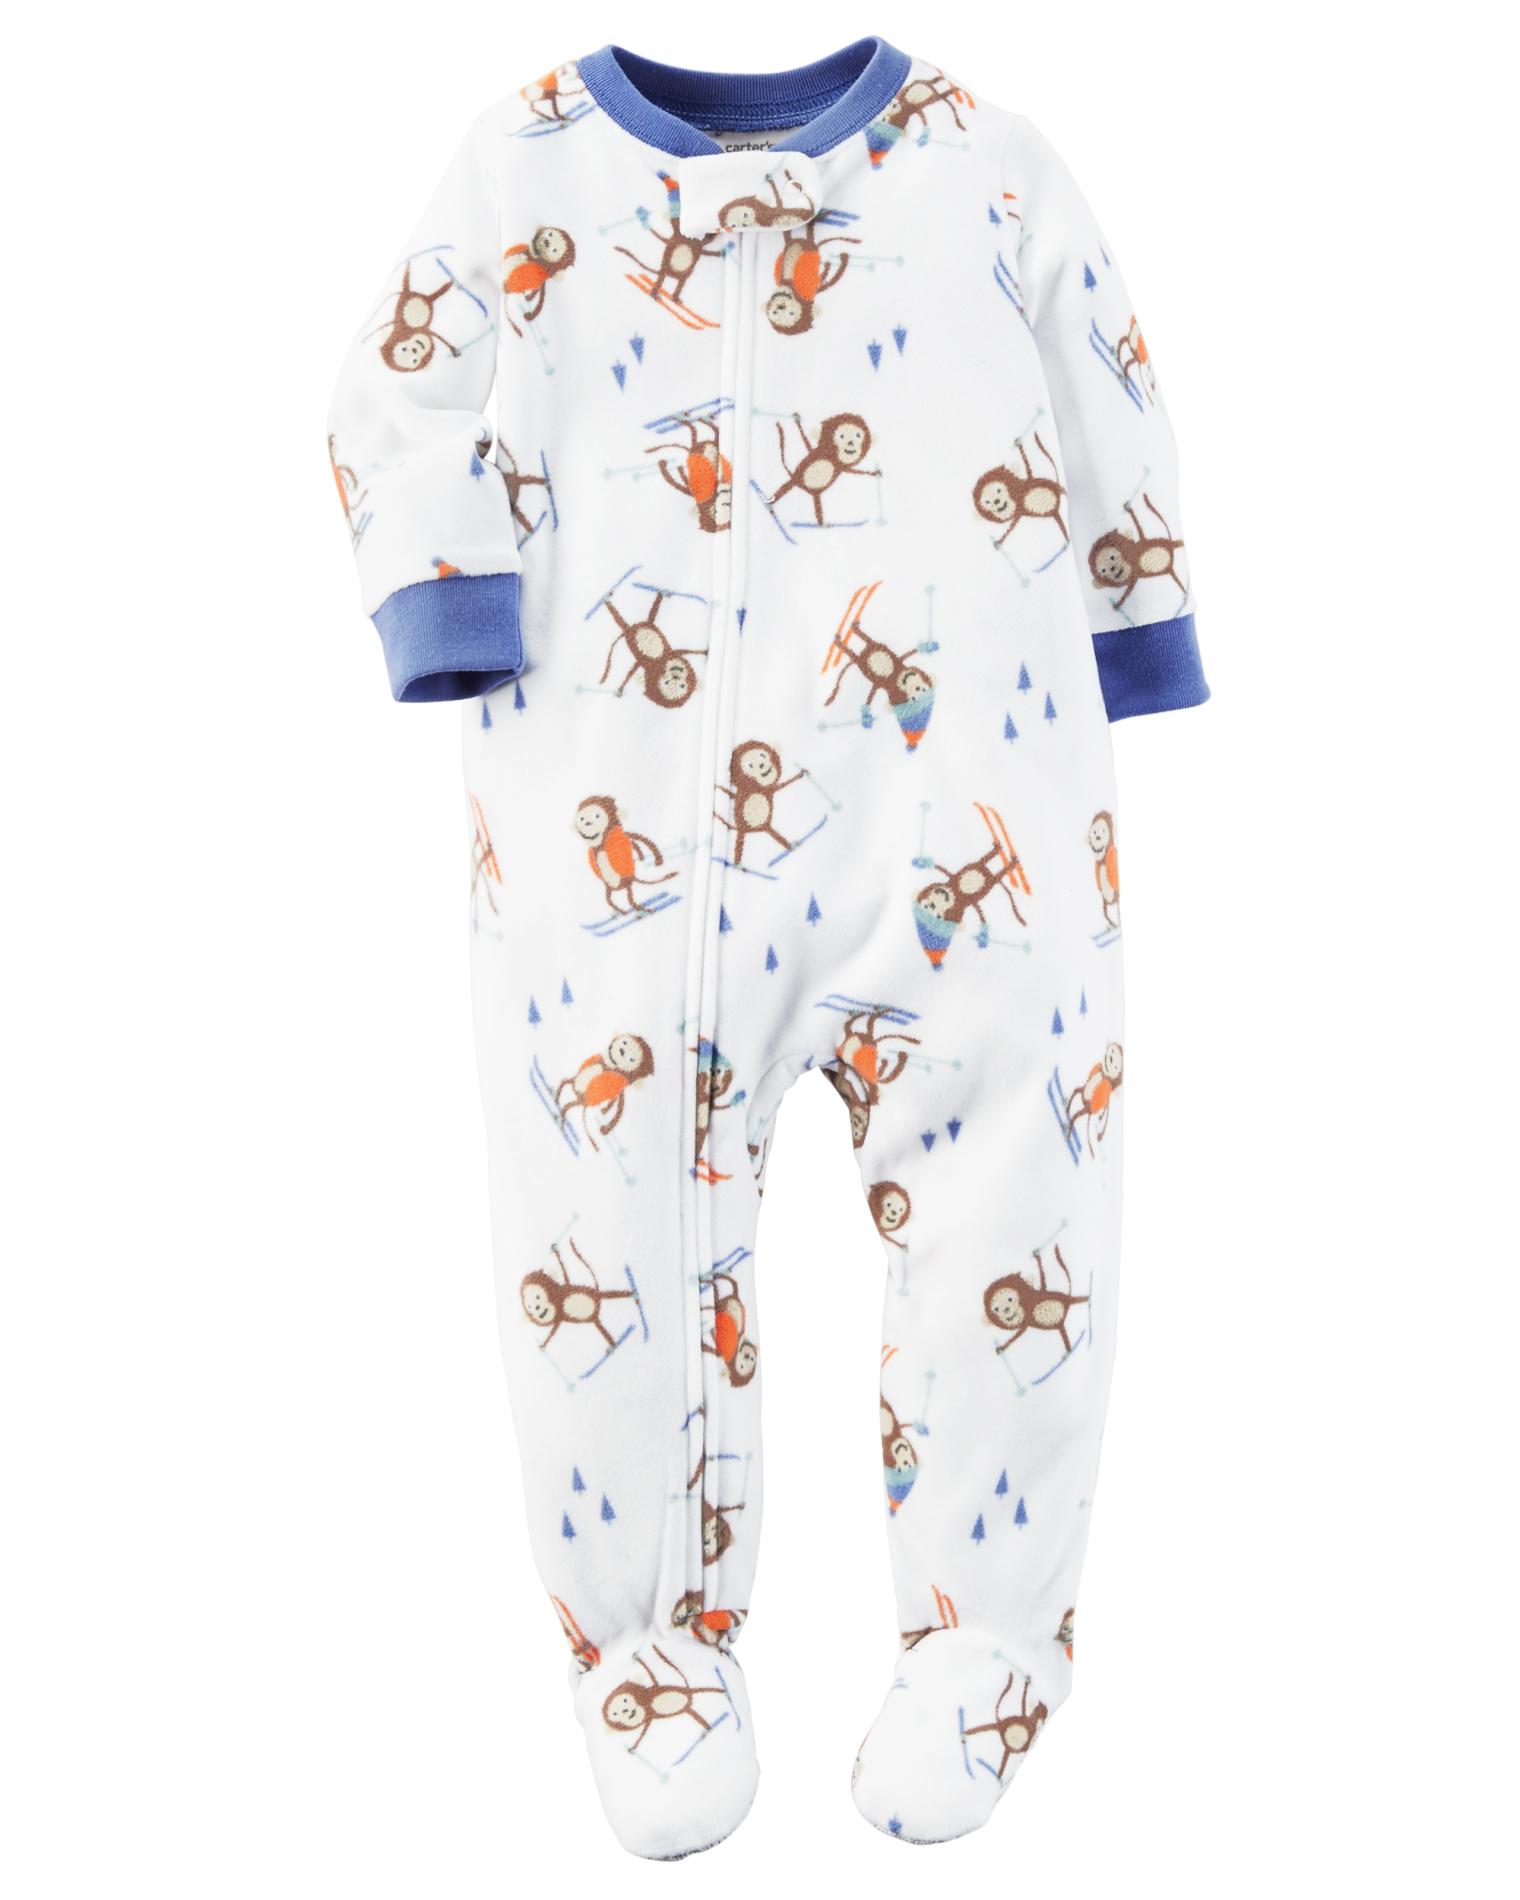 Carter's Infant & Toddler Boys' Fleece Sleeper Pajamas - Monkey